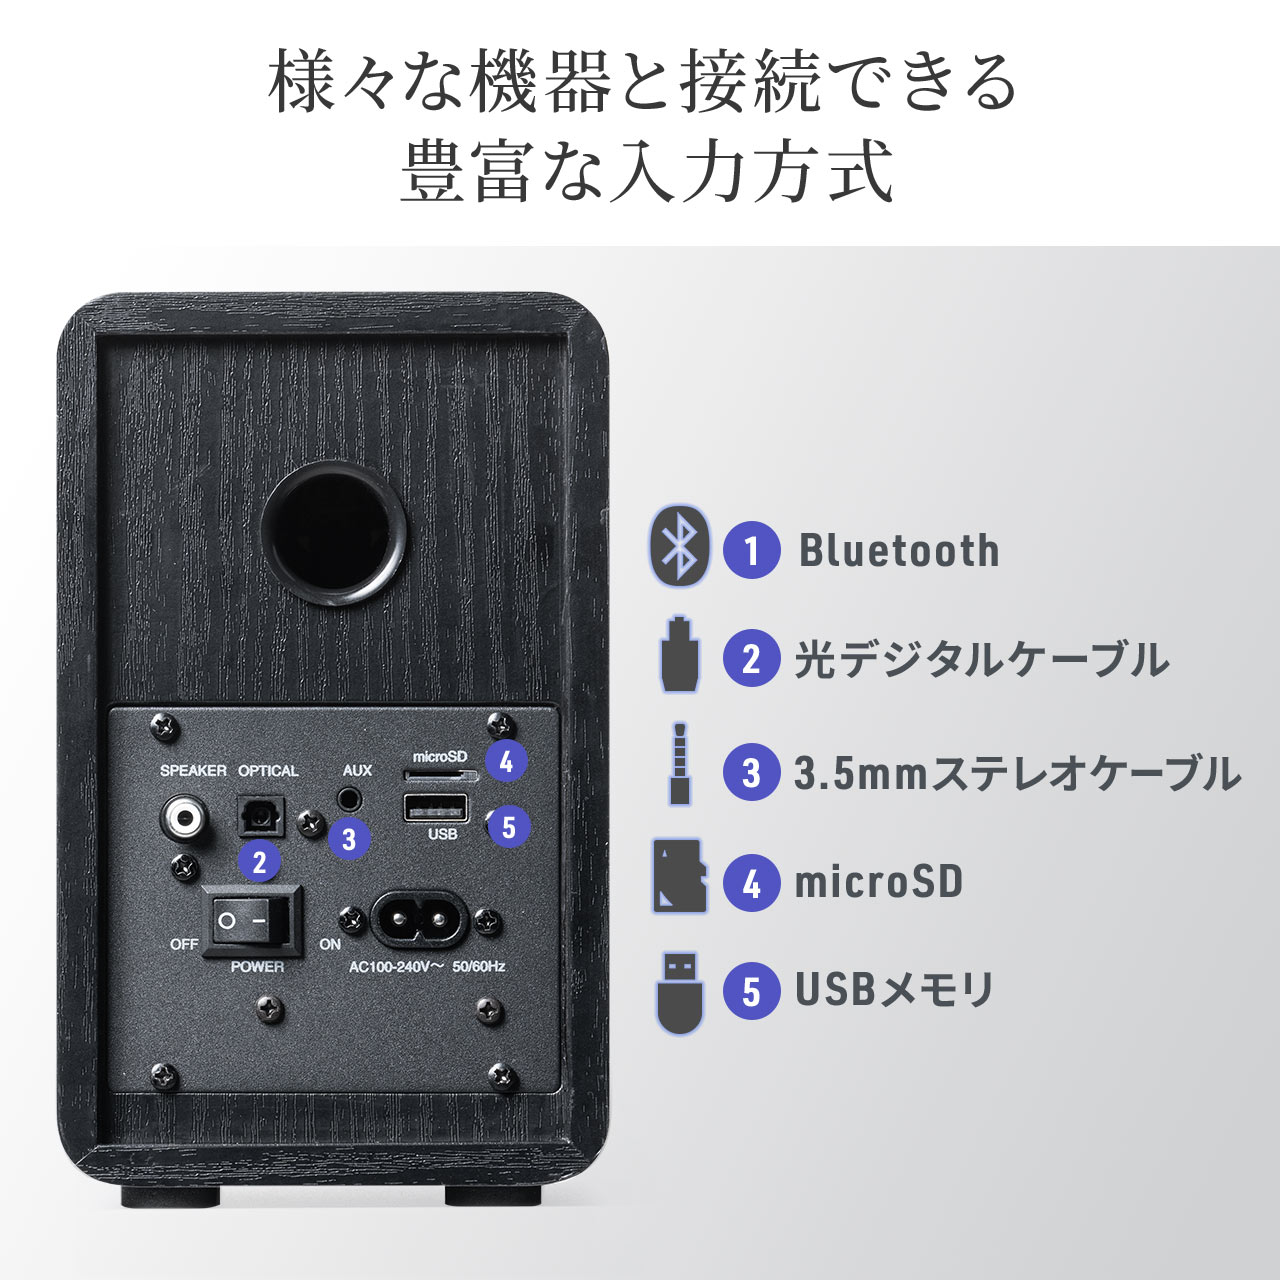 PCスピーカー 80W出力 Bluetooth 3.5mmプラグ 光デジタル接続 USBメモリー microSD再生 400-SP104